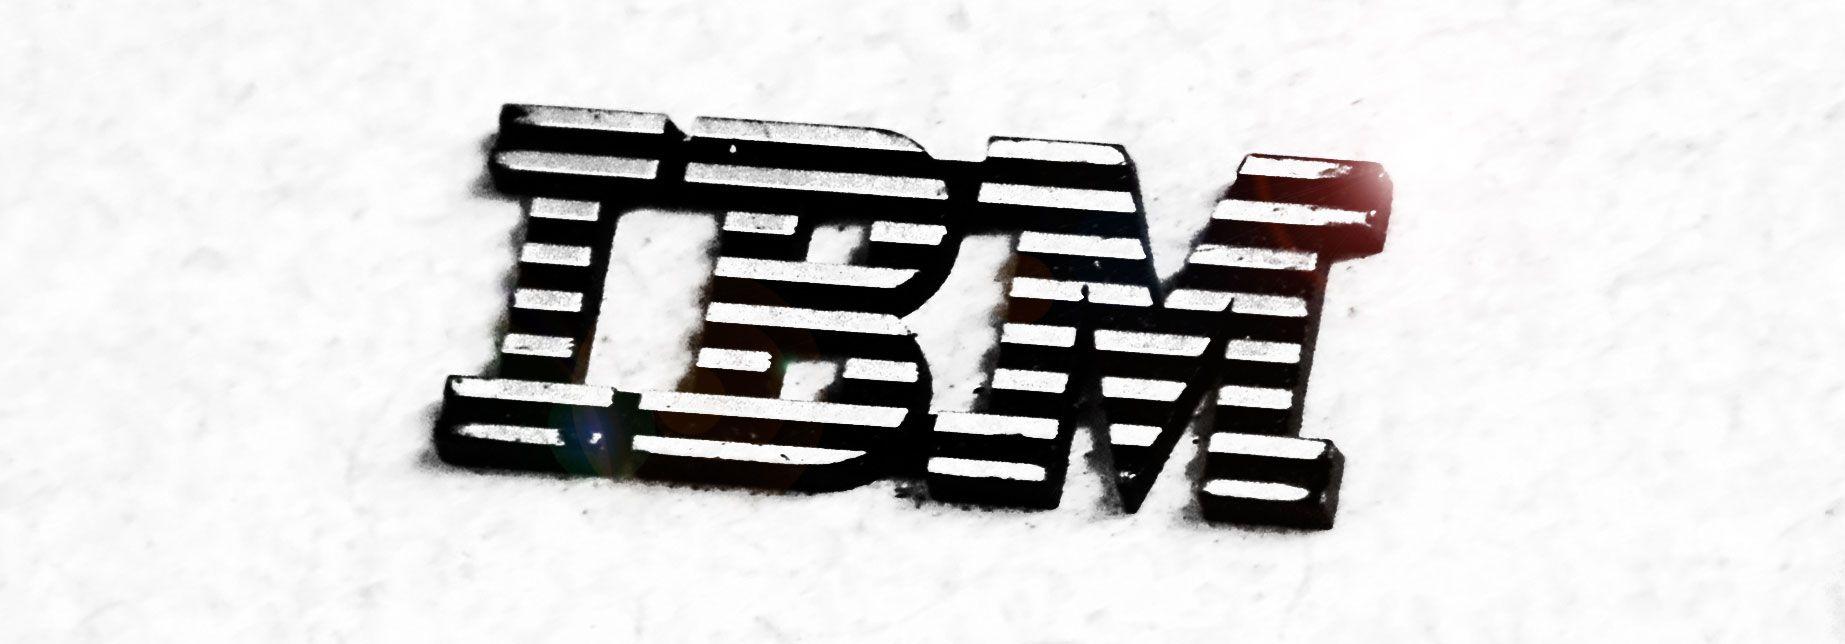 IMB Logo - I.T. News: IBM Releases Free Internet Security Training Tools